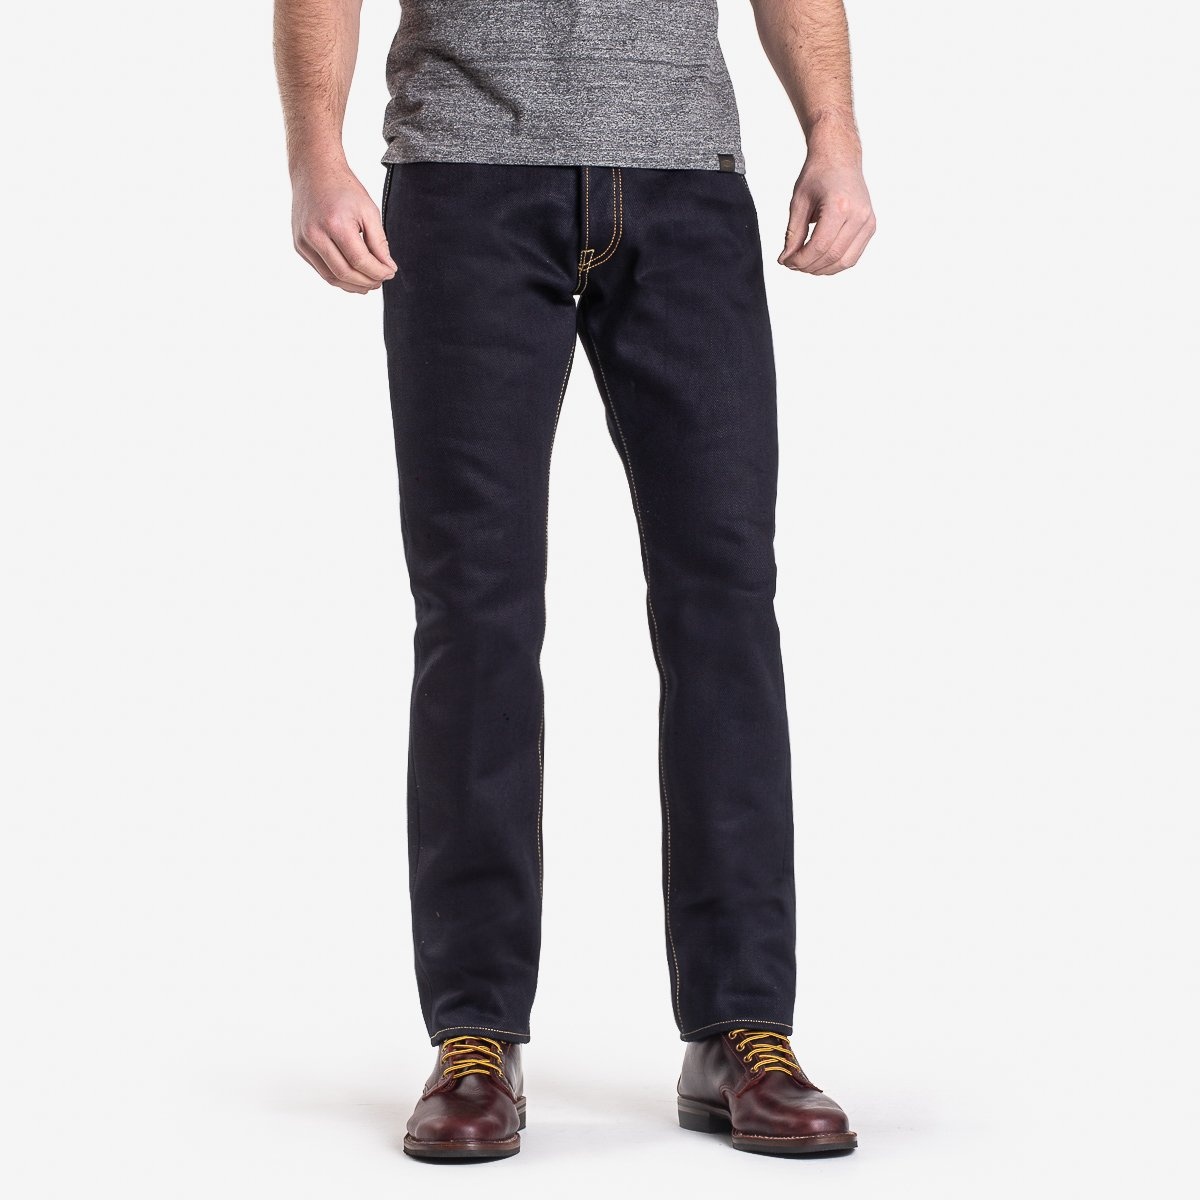 IH-888-XHSib 25oz Selvedge Denim Medium/High Rise Tapered Cut Jeans - Indigo/Black - 2